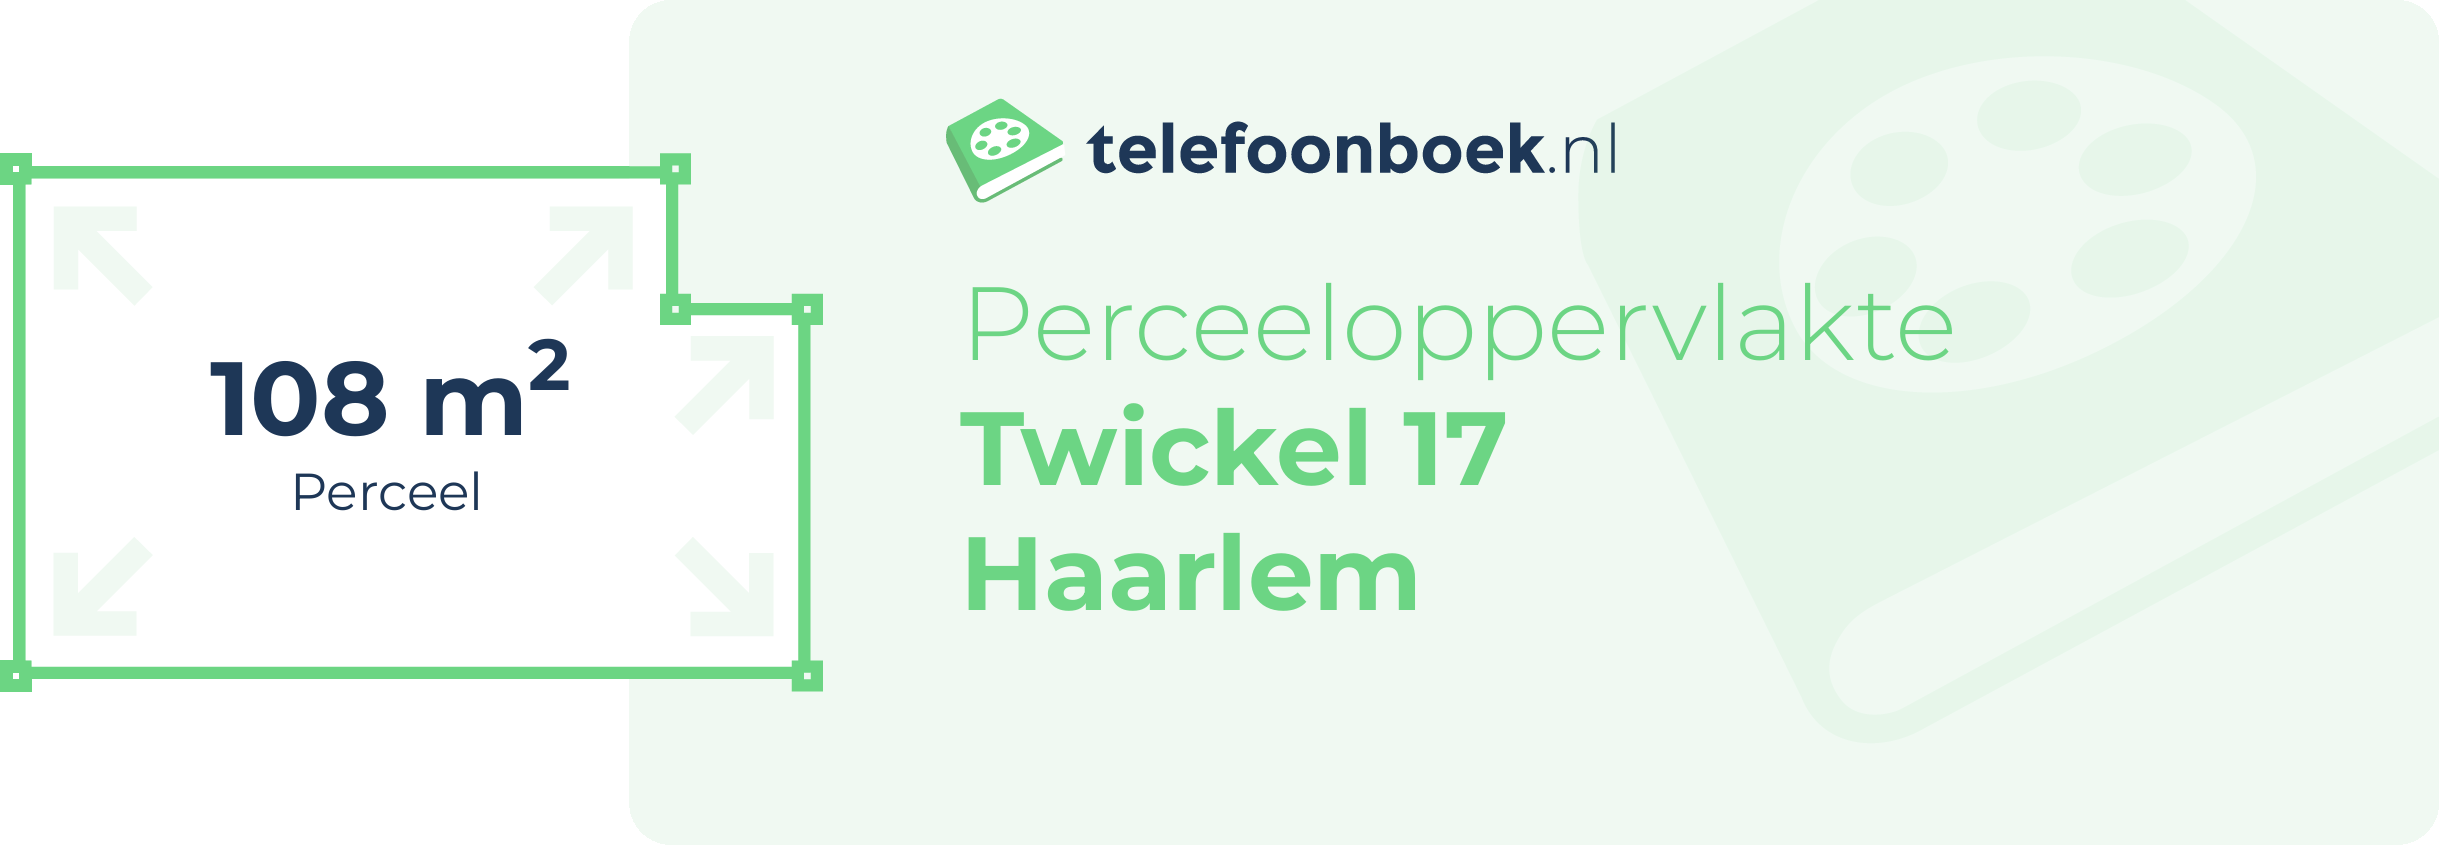 Perceeloppervlakte Twickel 17 Haarlem